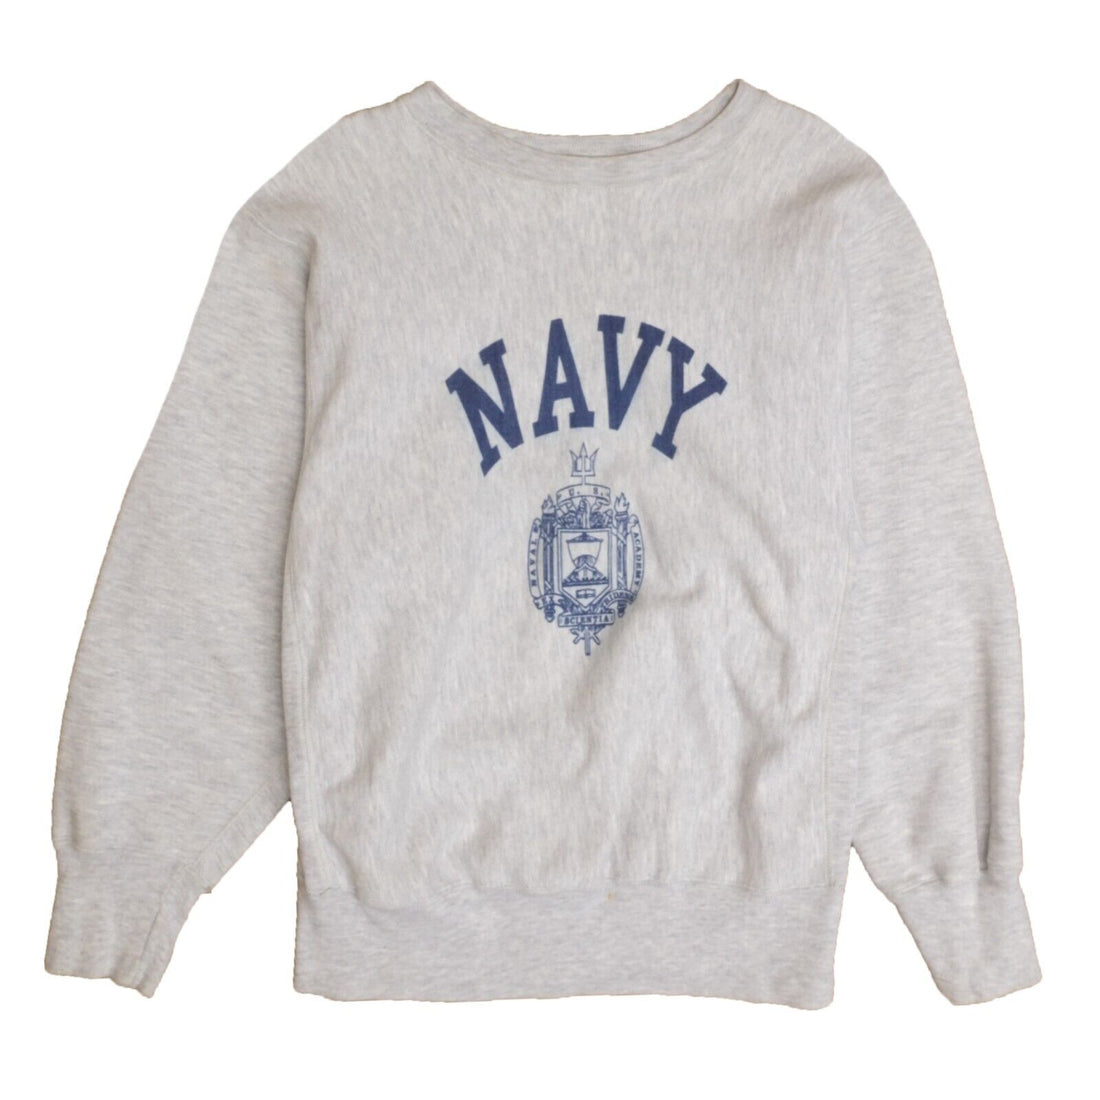 Vintage US Navy Champion Reverse Weave Sweatshirt Crewneck Size Medium USN 80s